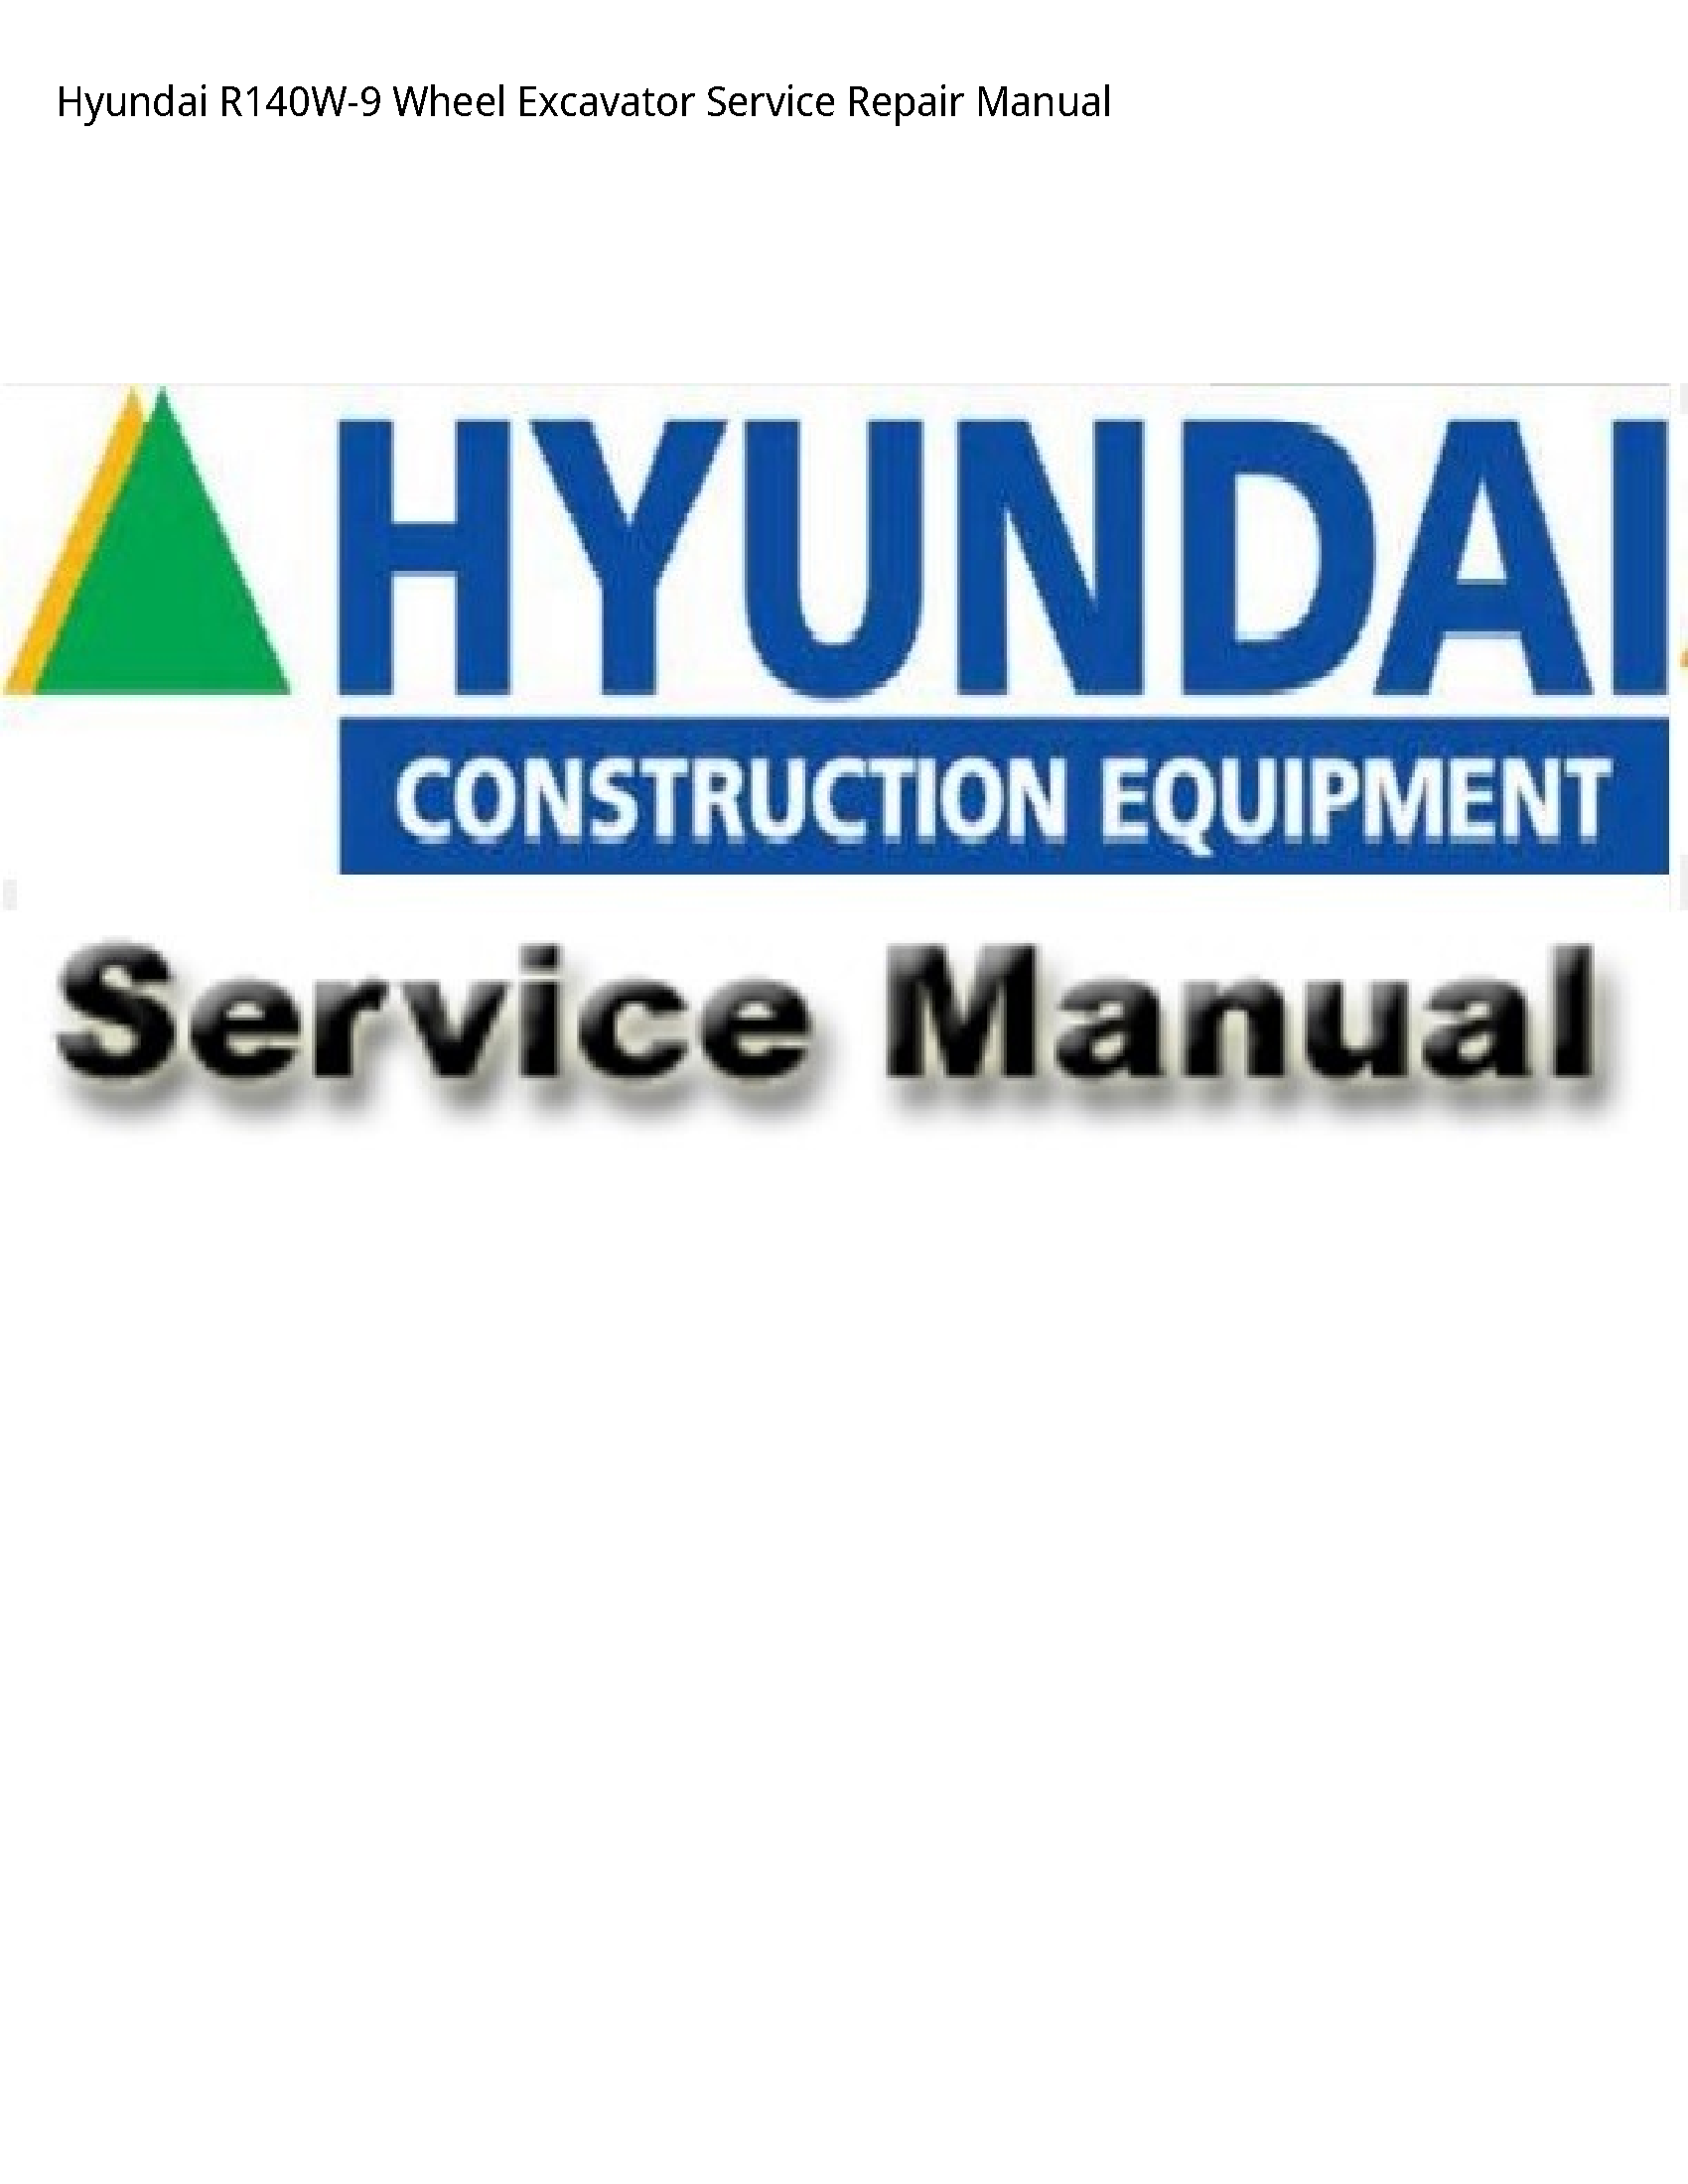 Hyundai R140W-9 Wheel Excavator manual